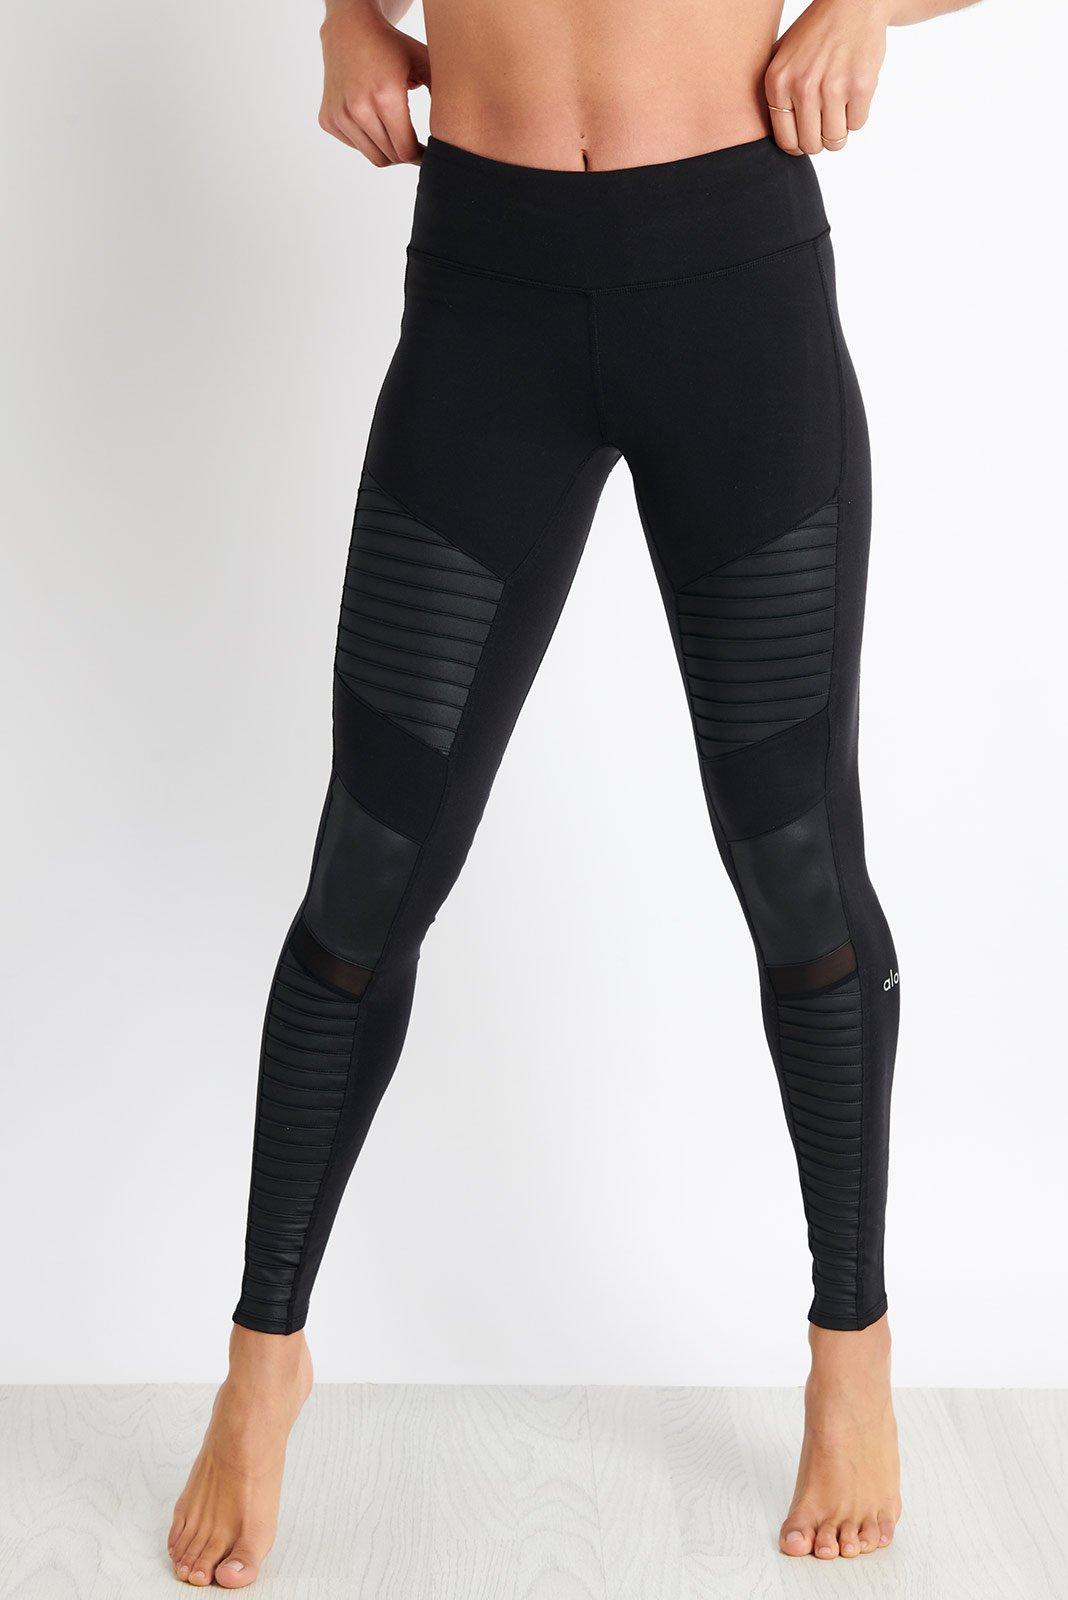 ALO Yoga Moto Black Mesh Detail Leggings S ($114)